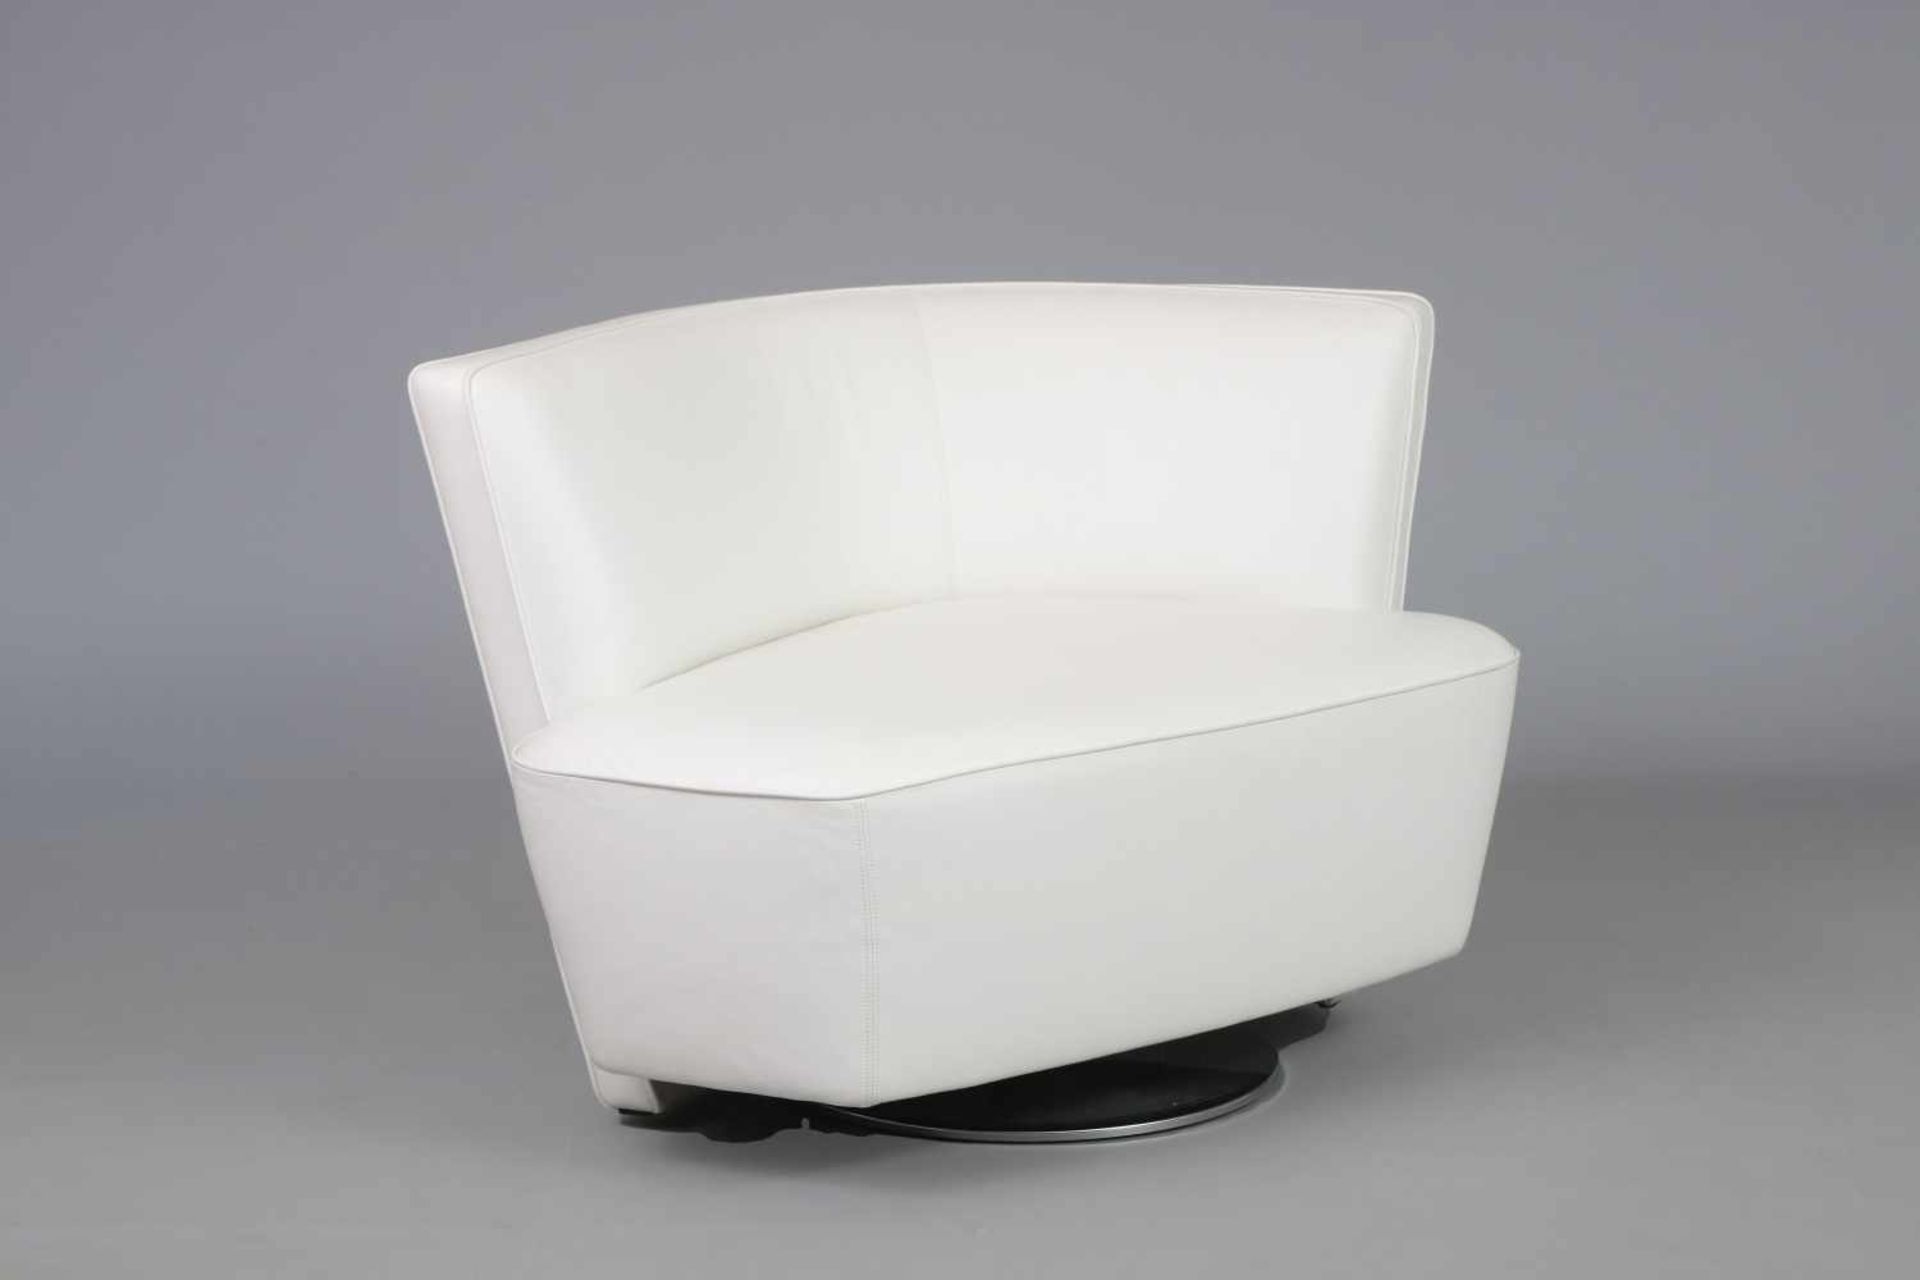 WALTER KNOLL Sessel ¨Drift¨weißes Leder, auf verchromtem Metallstand, neuwertiger Zustand, Neup - Bild 2 aus 3